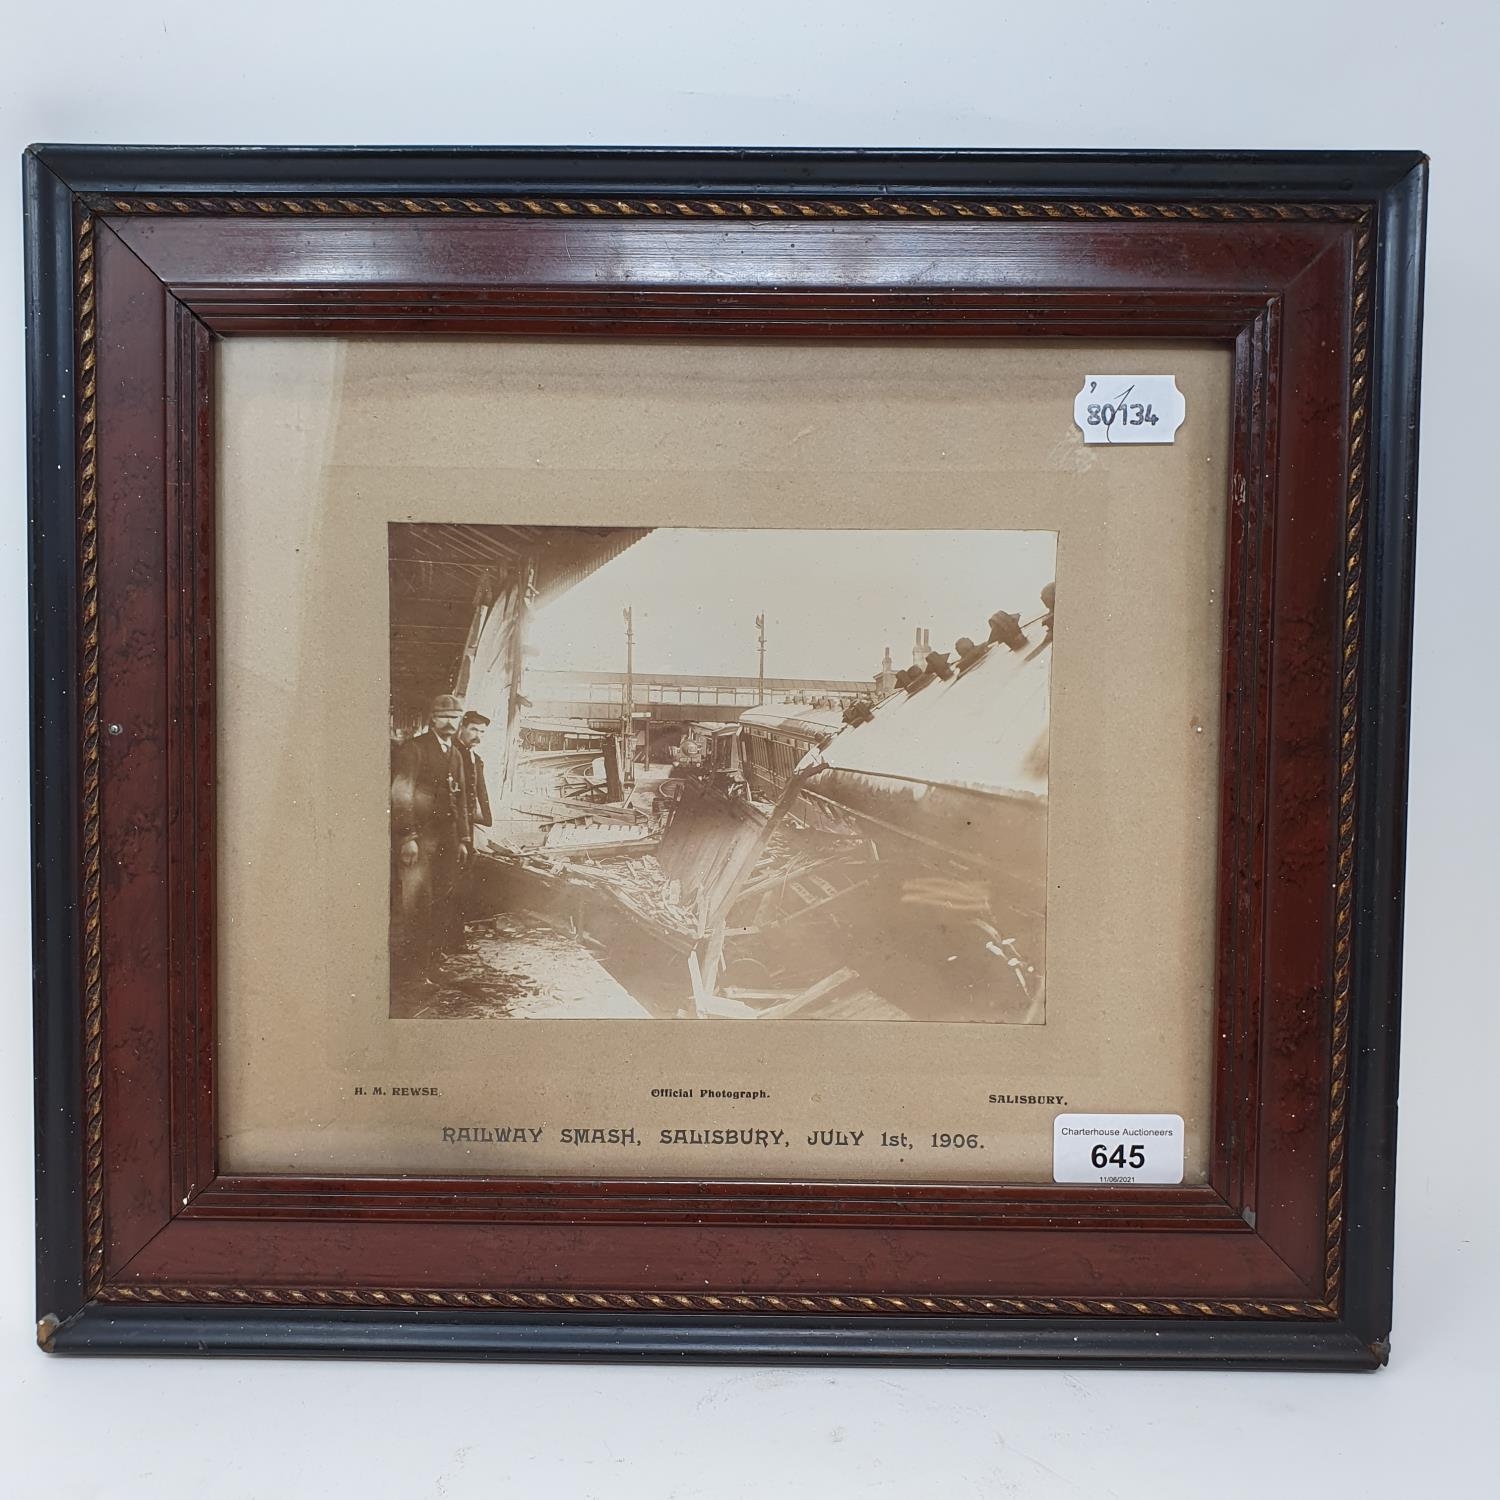 A monochrome photograph, The Railway Smash Salisbury July 1st 1906, 24 x 29 cm